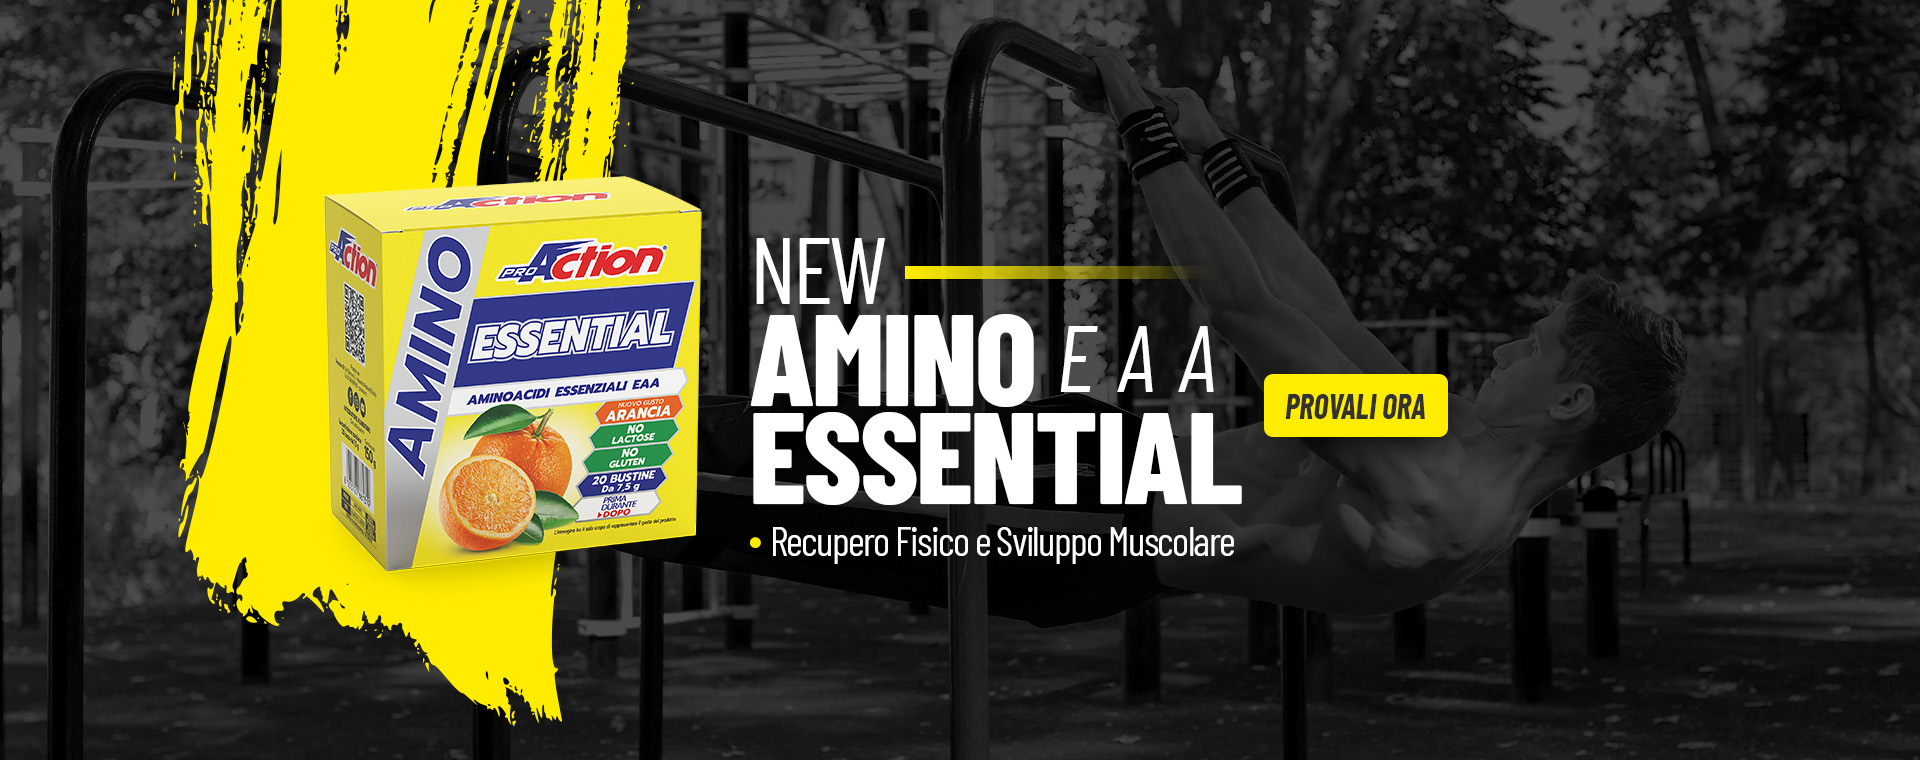 amino-essential-eaa